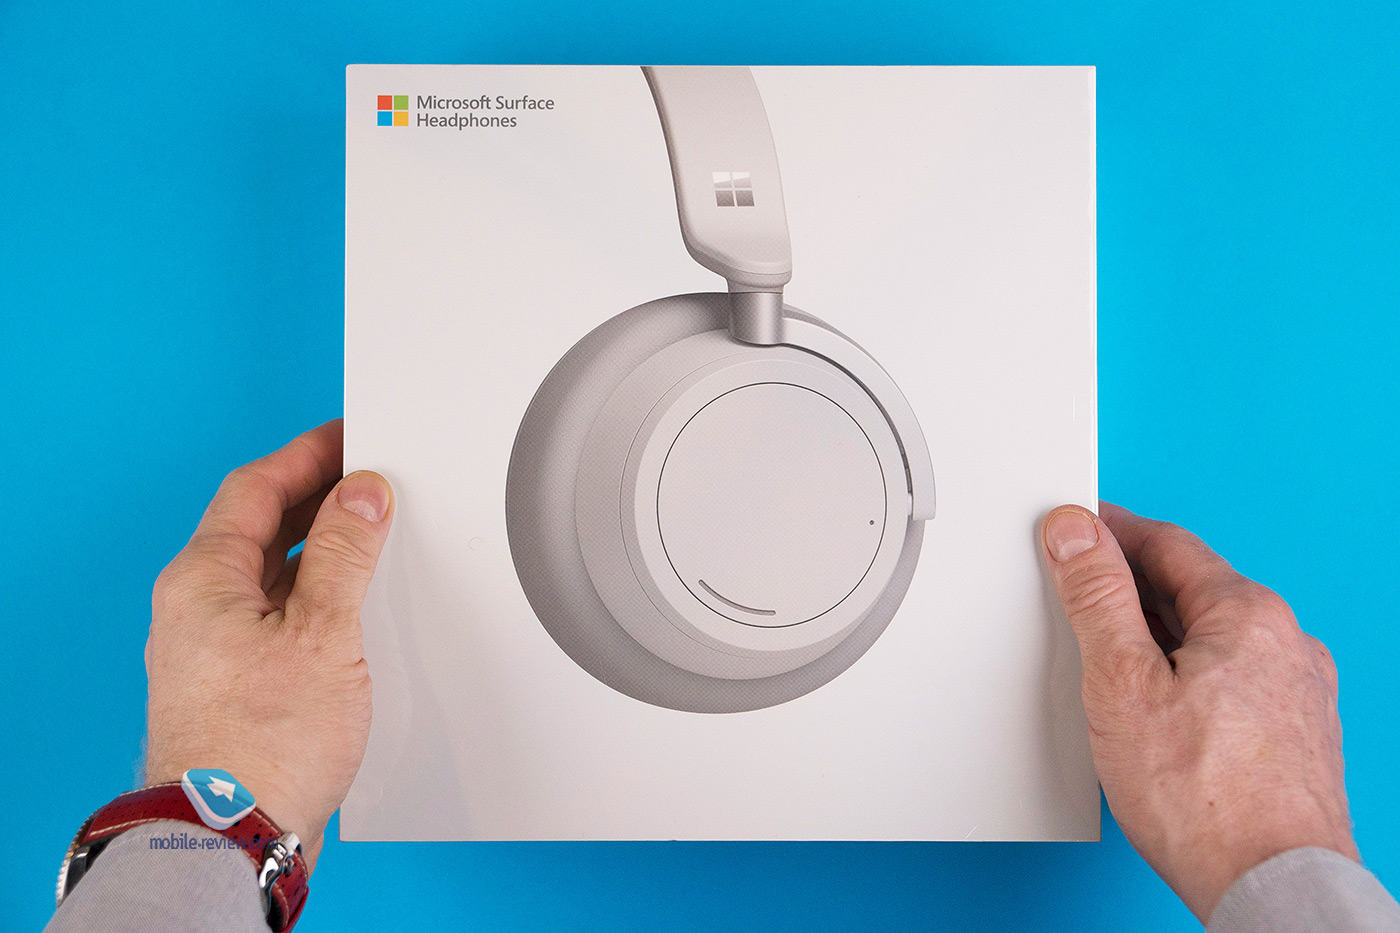      Microsoft Surface Headphones